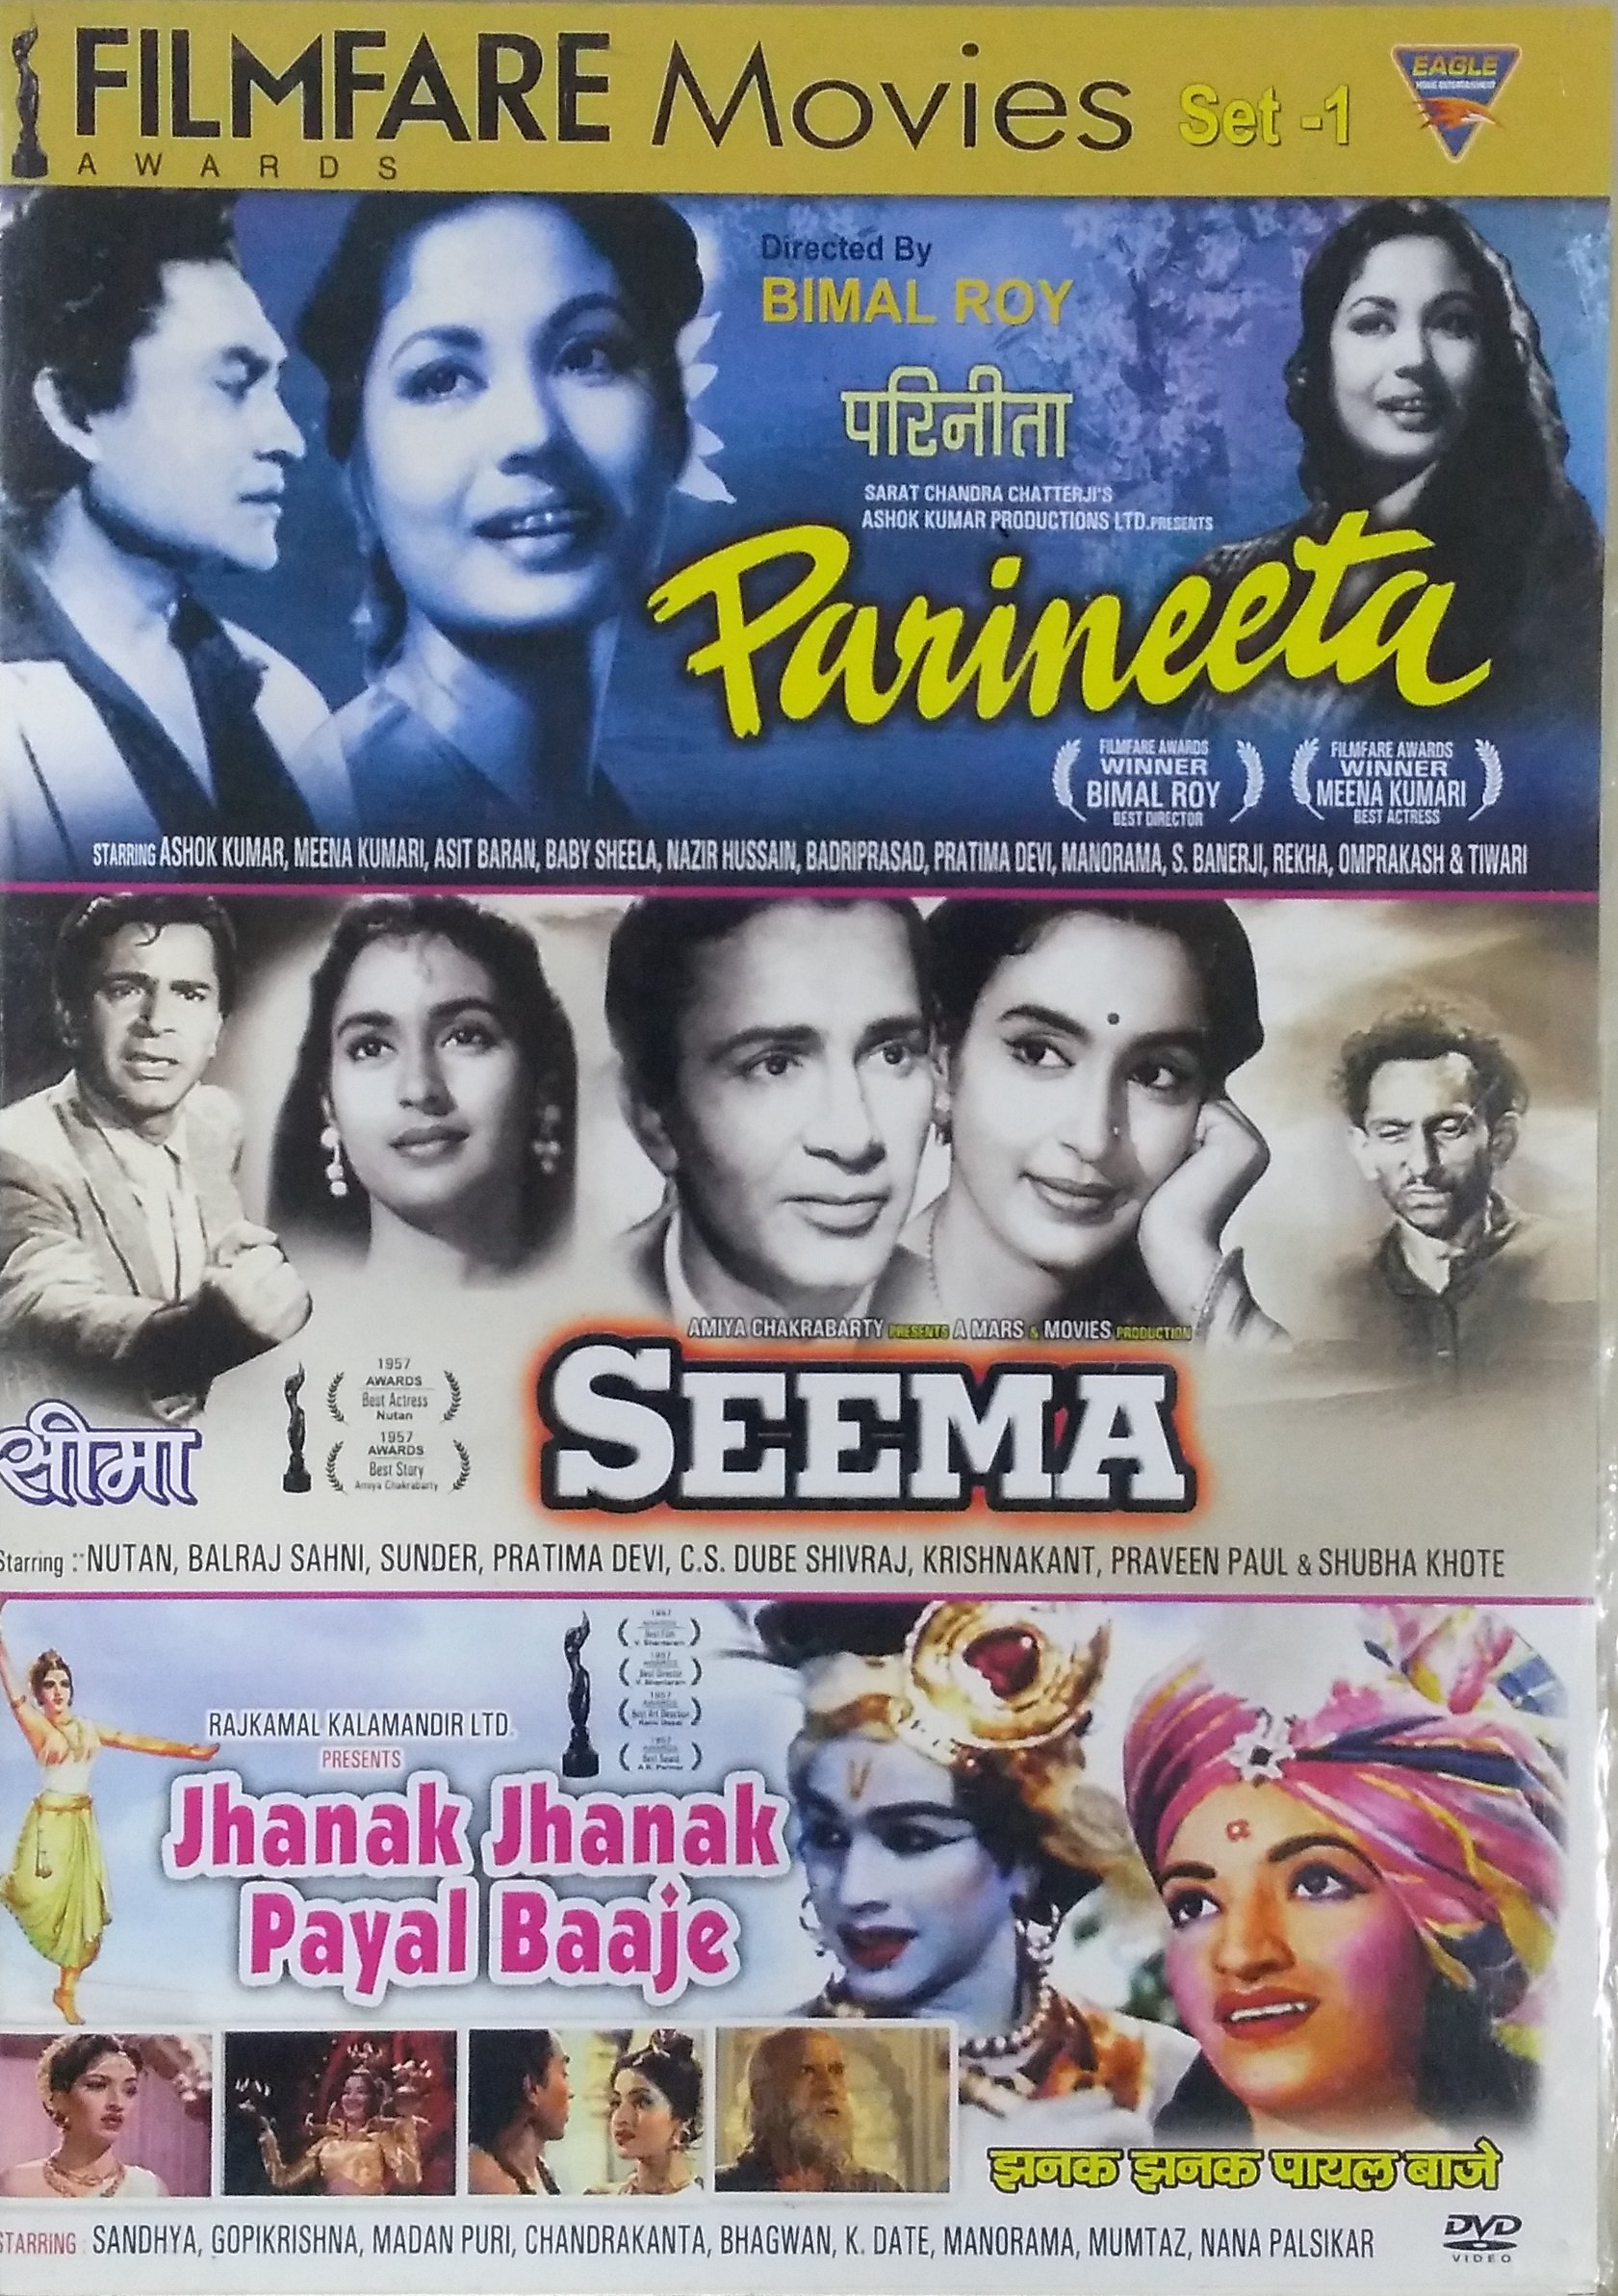 filmfare-award-movie-set-1-pareenita-seema-jhanak-jhanak-payal-baaje